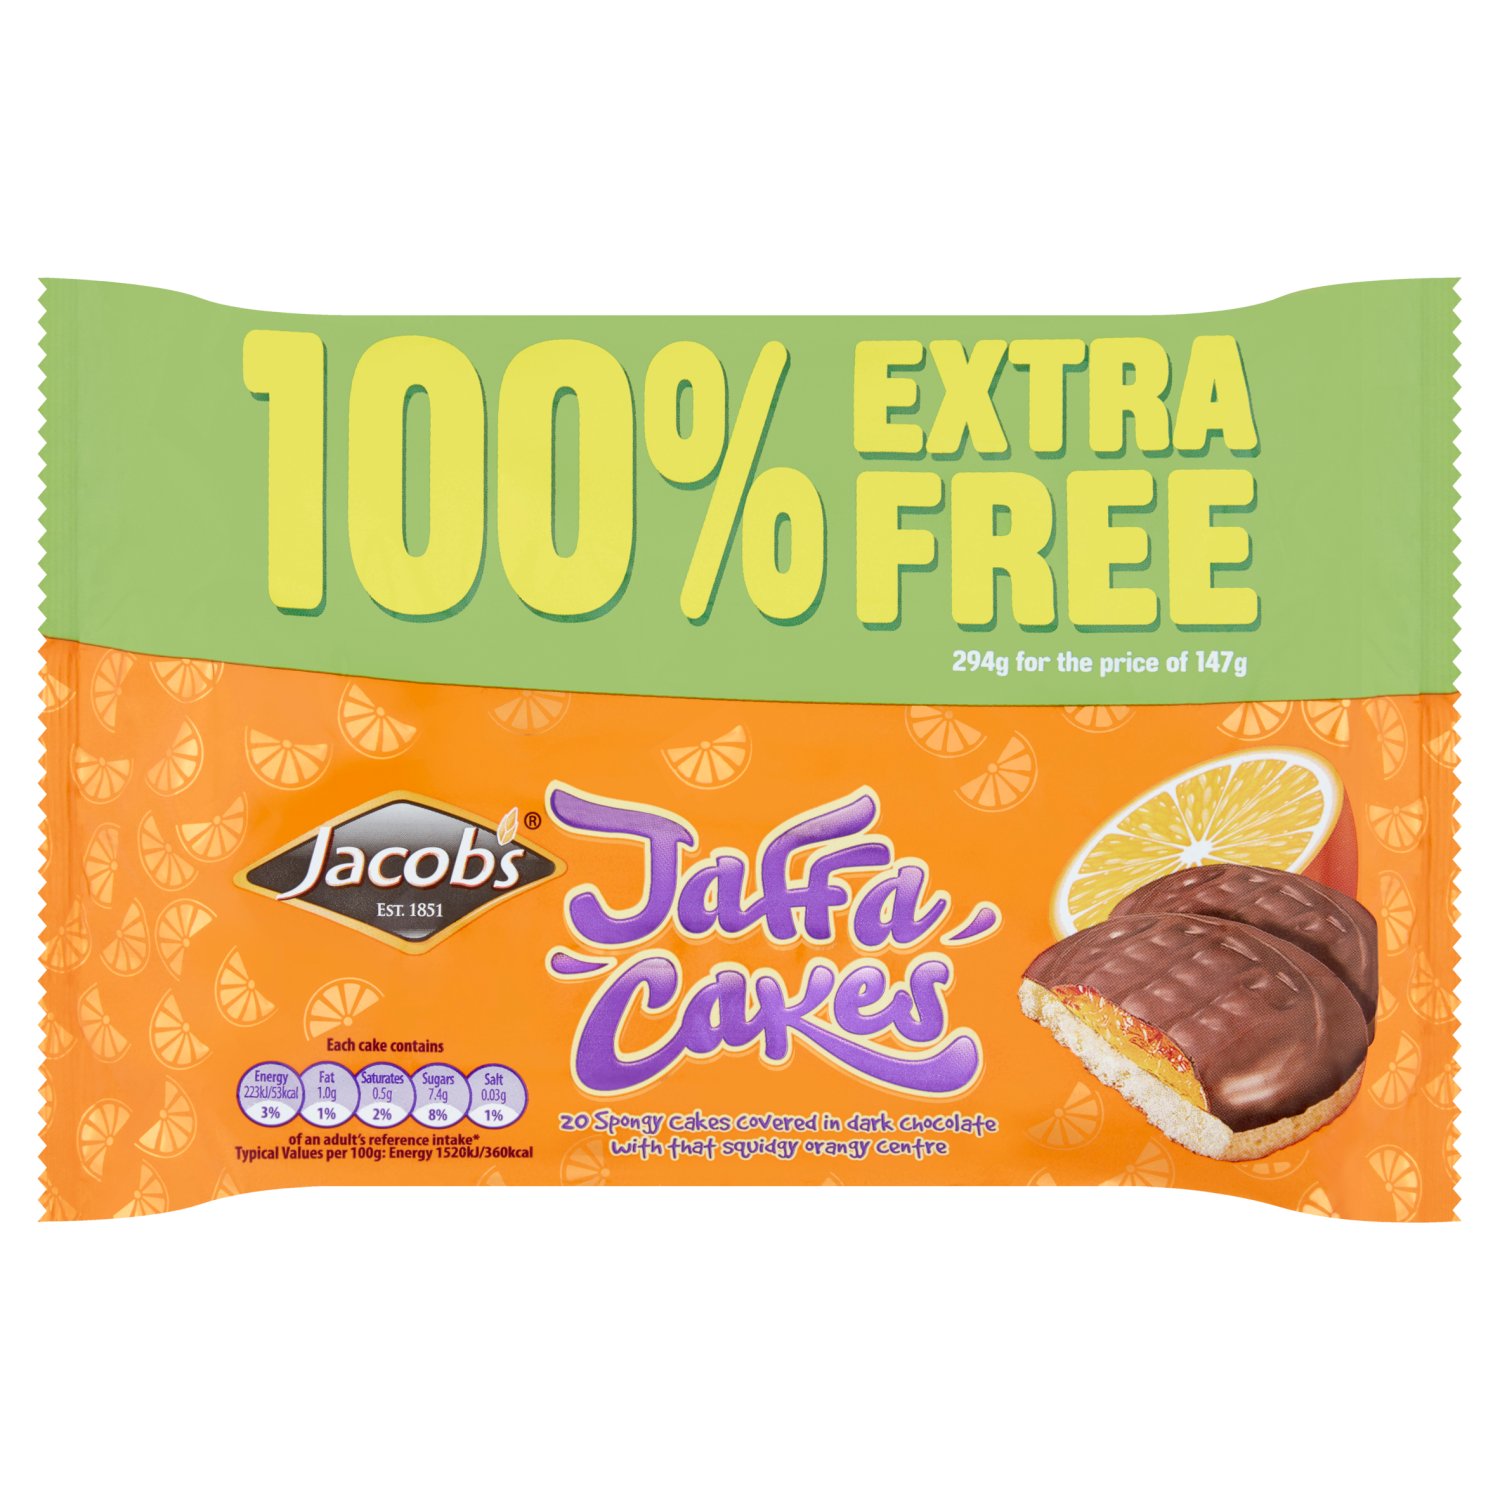 Jacob's Jaffa Cakes 100% Extra Free Pack (147 g)